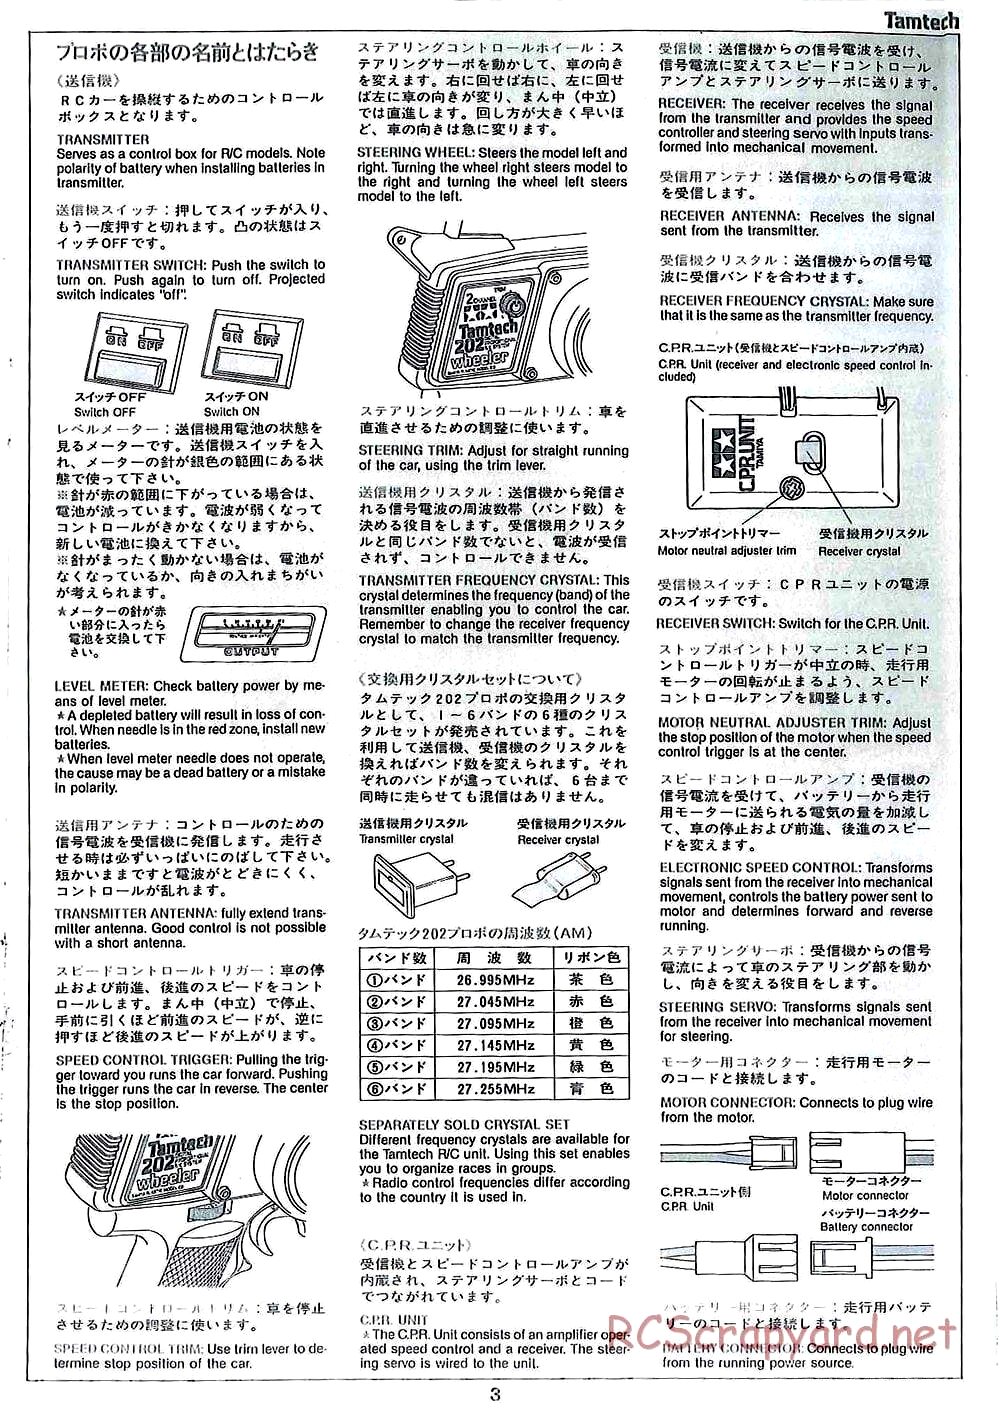 Tamiya - TamTech - F1 Chassis - Manual - Page 3